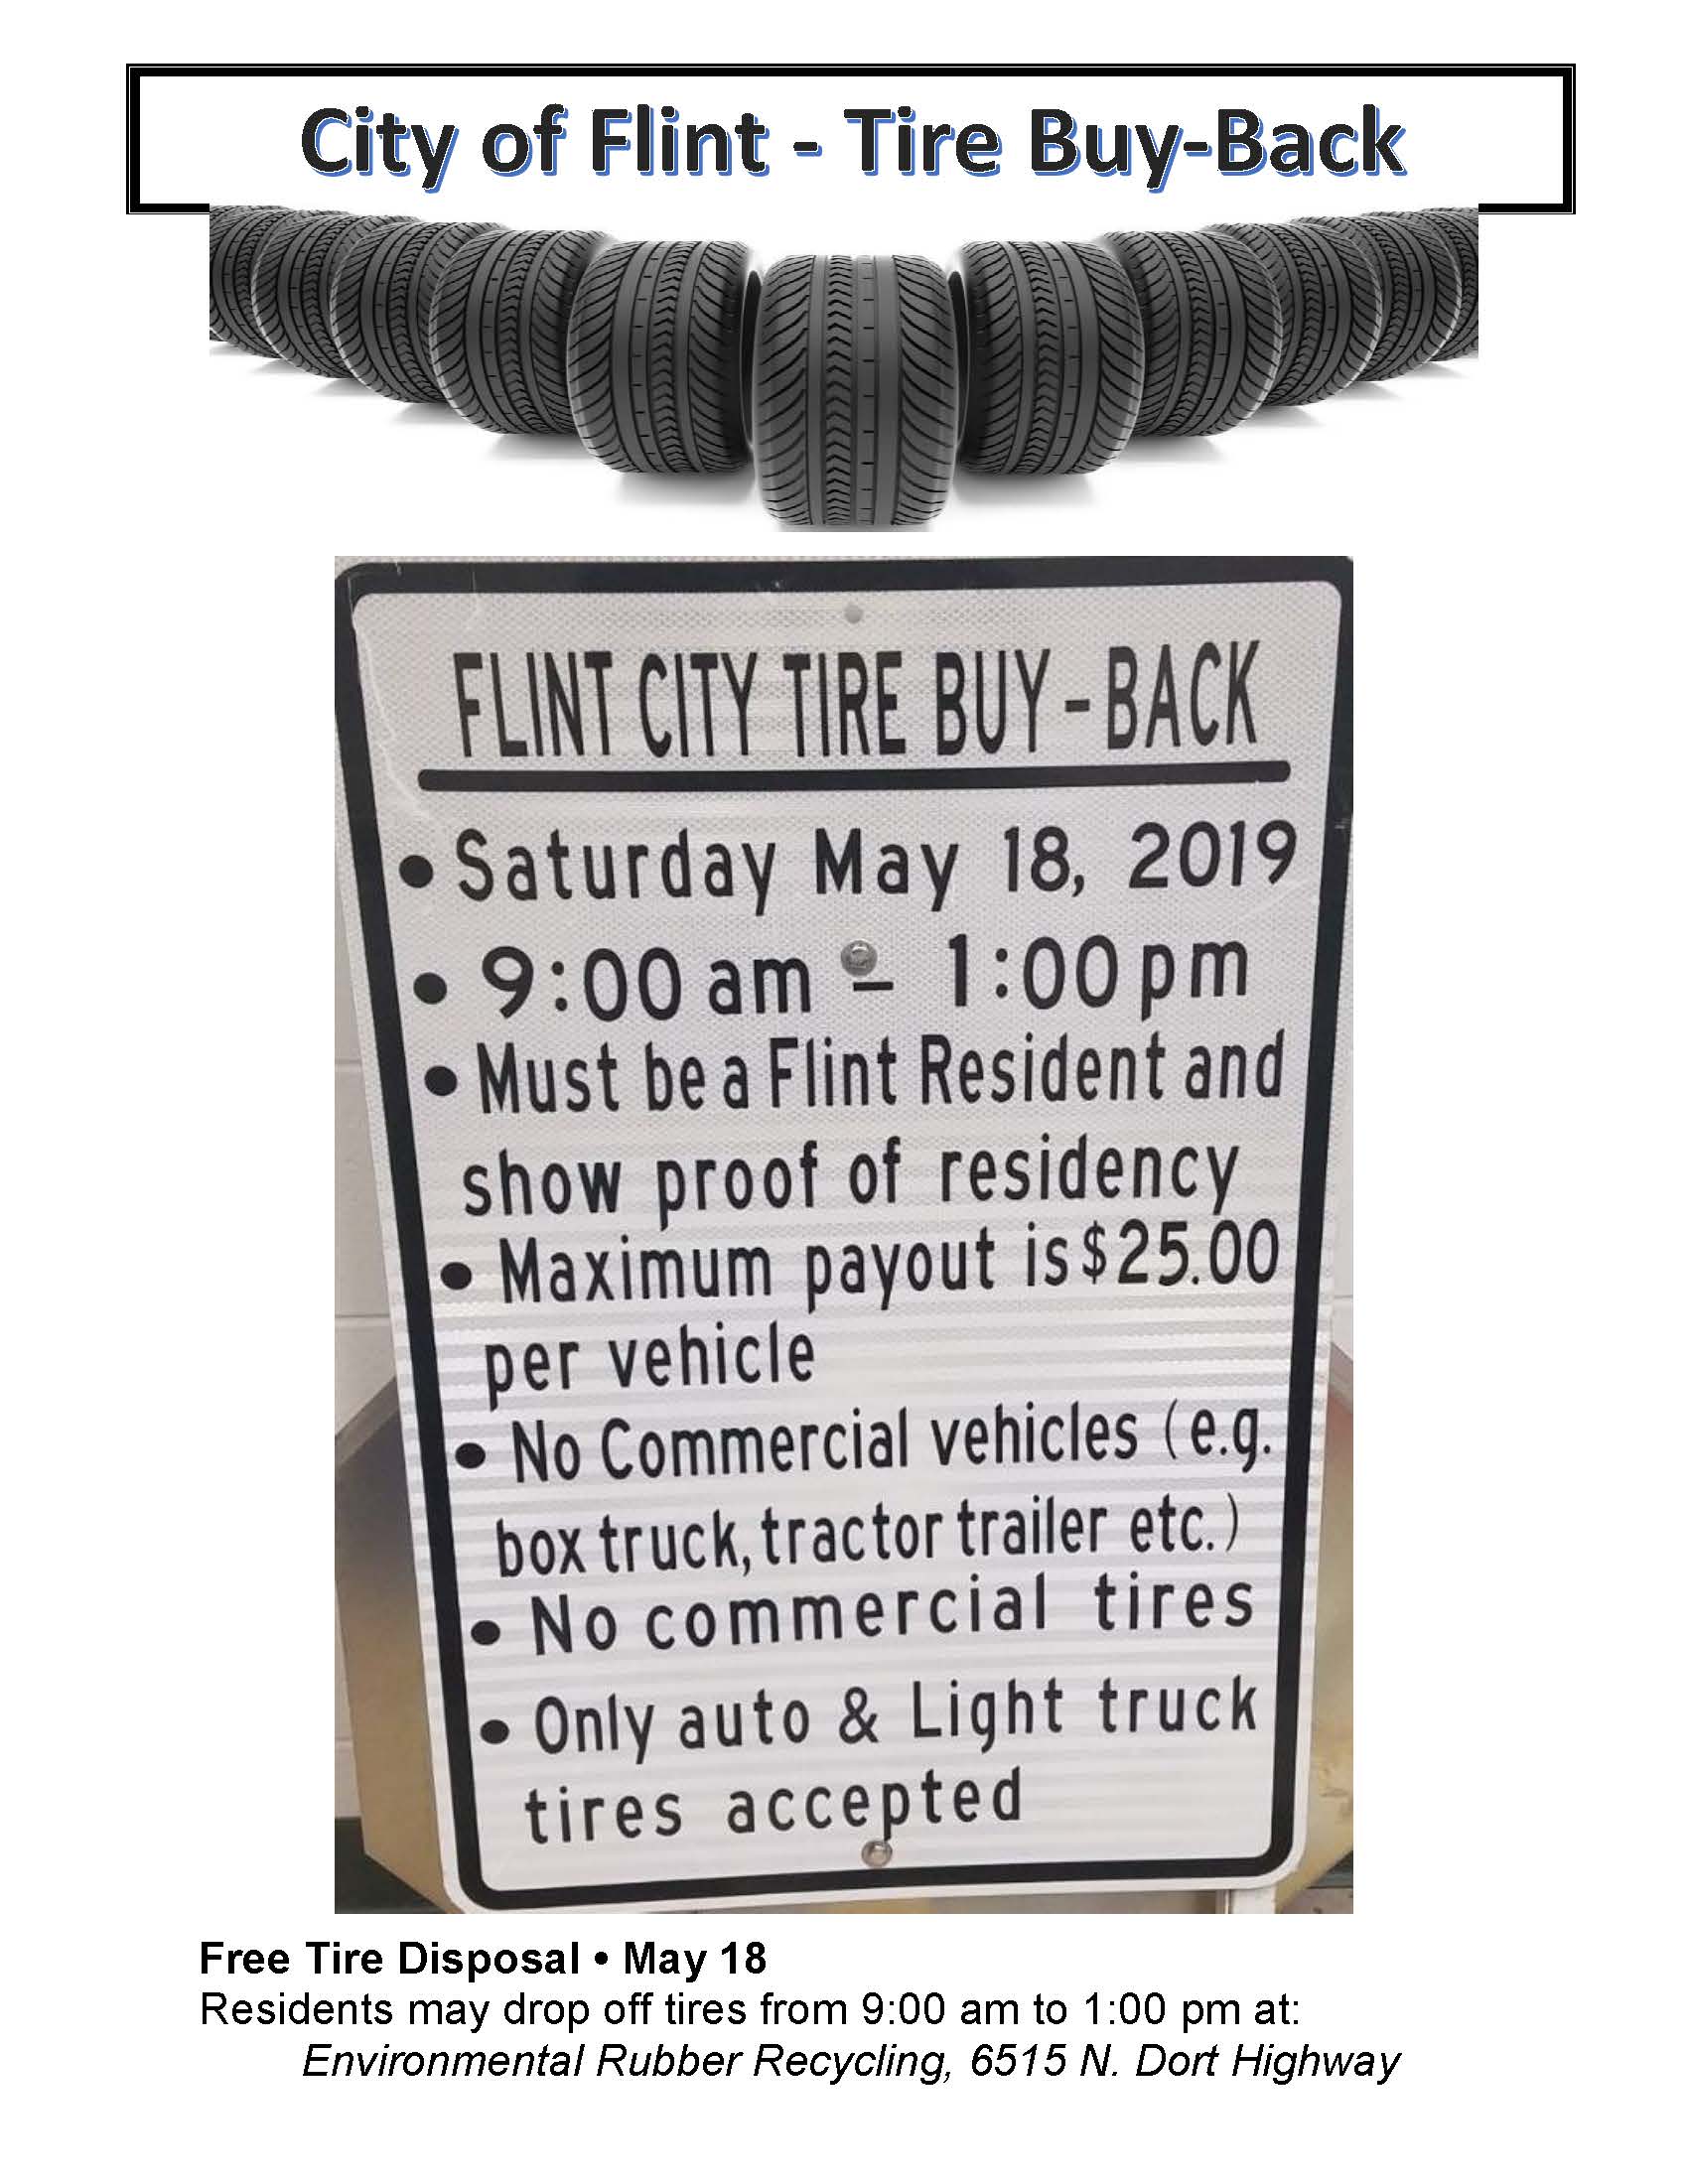 Free Tire Disposal